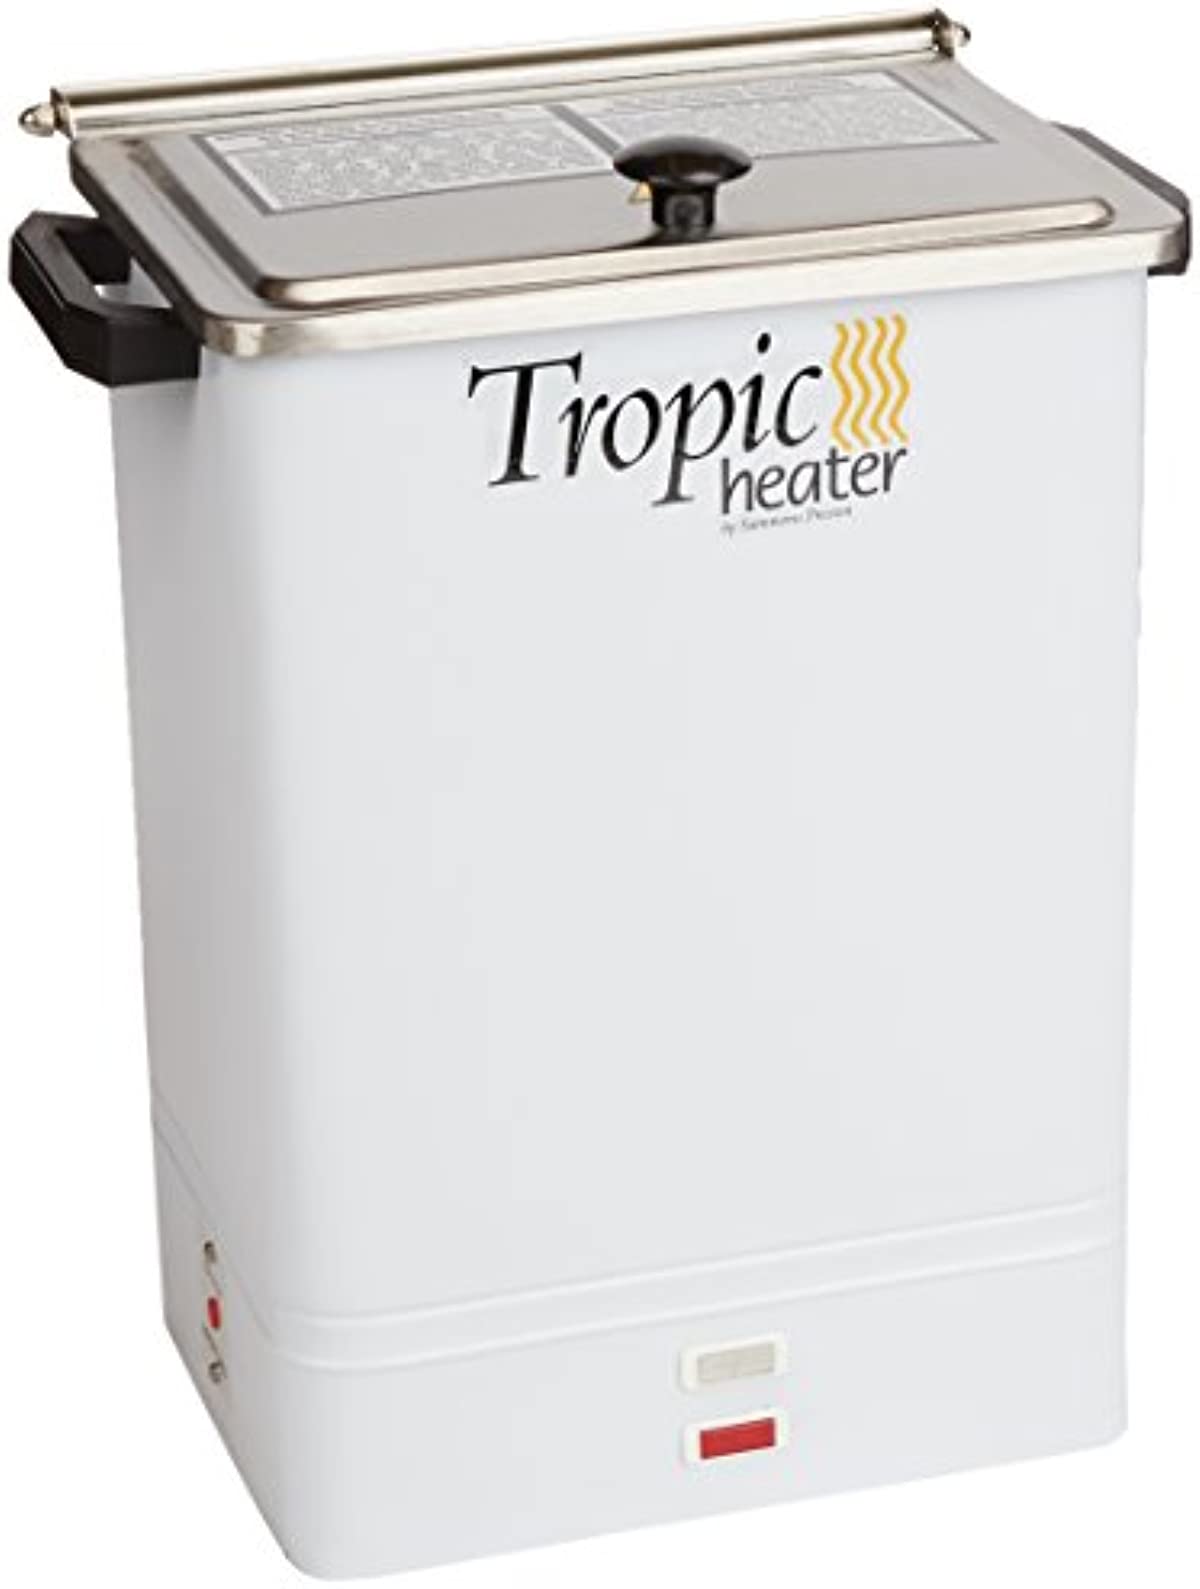 Sammons Preston Tropic Heater, Stationary Version, 4 Tropic Pacs Included